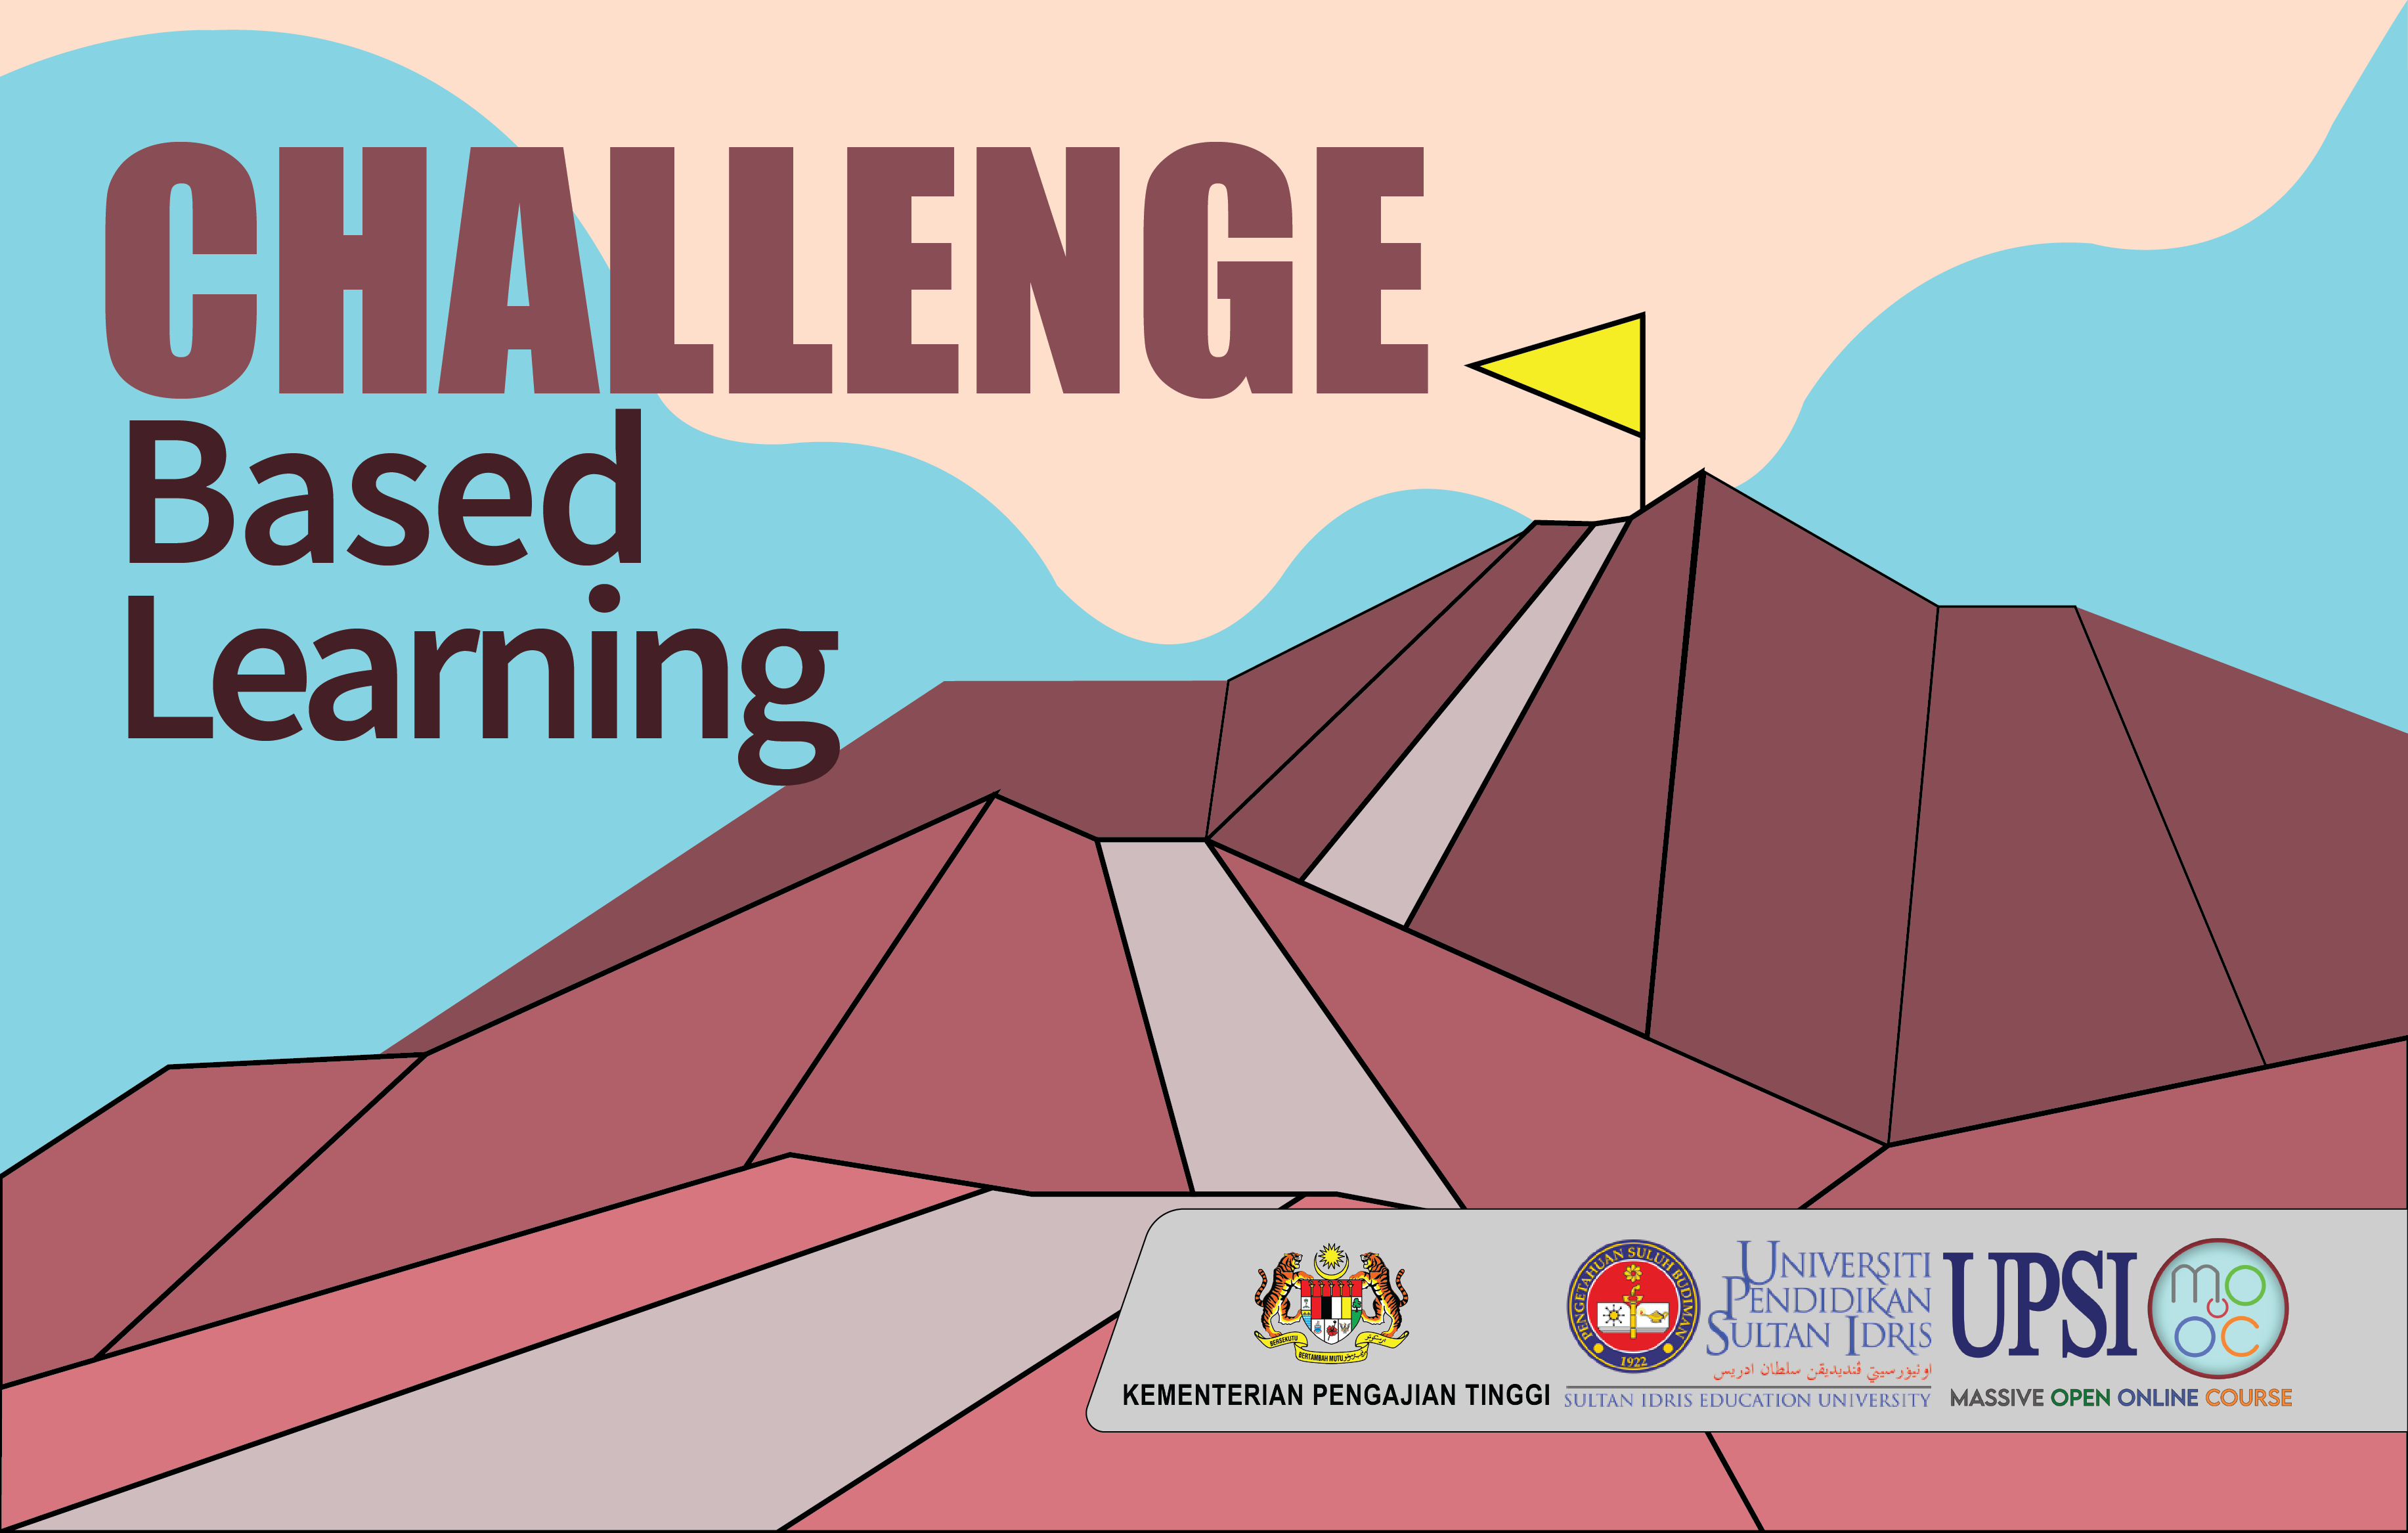 Challenge Based Learning